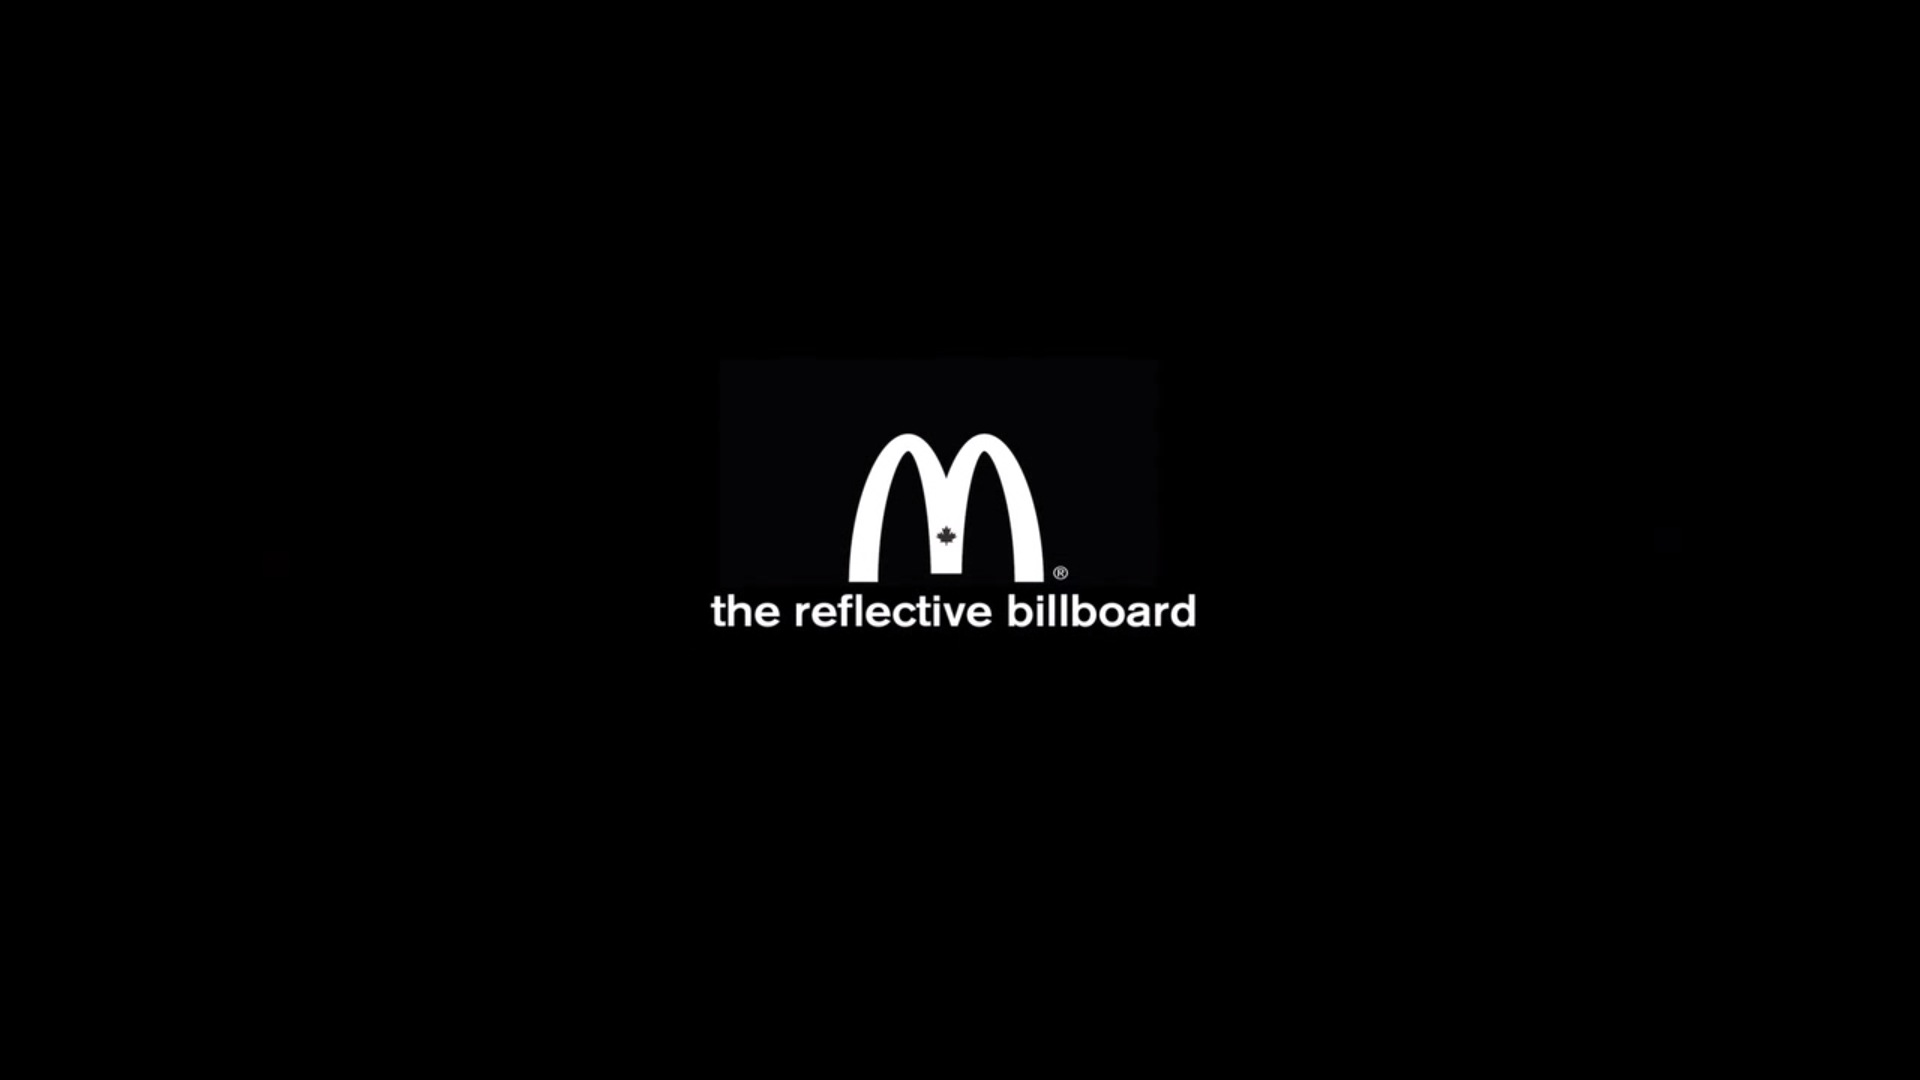 mcdonalds-reflective-billboard3